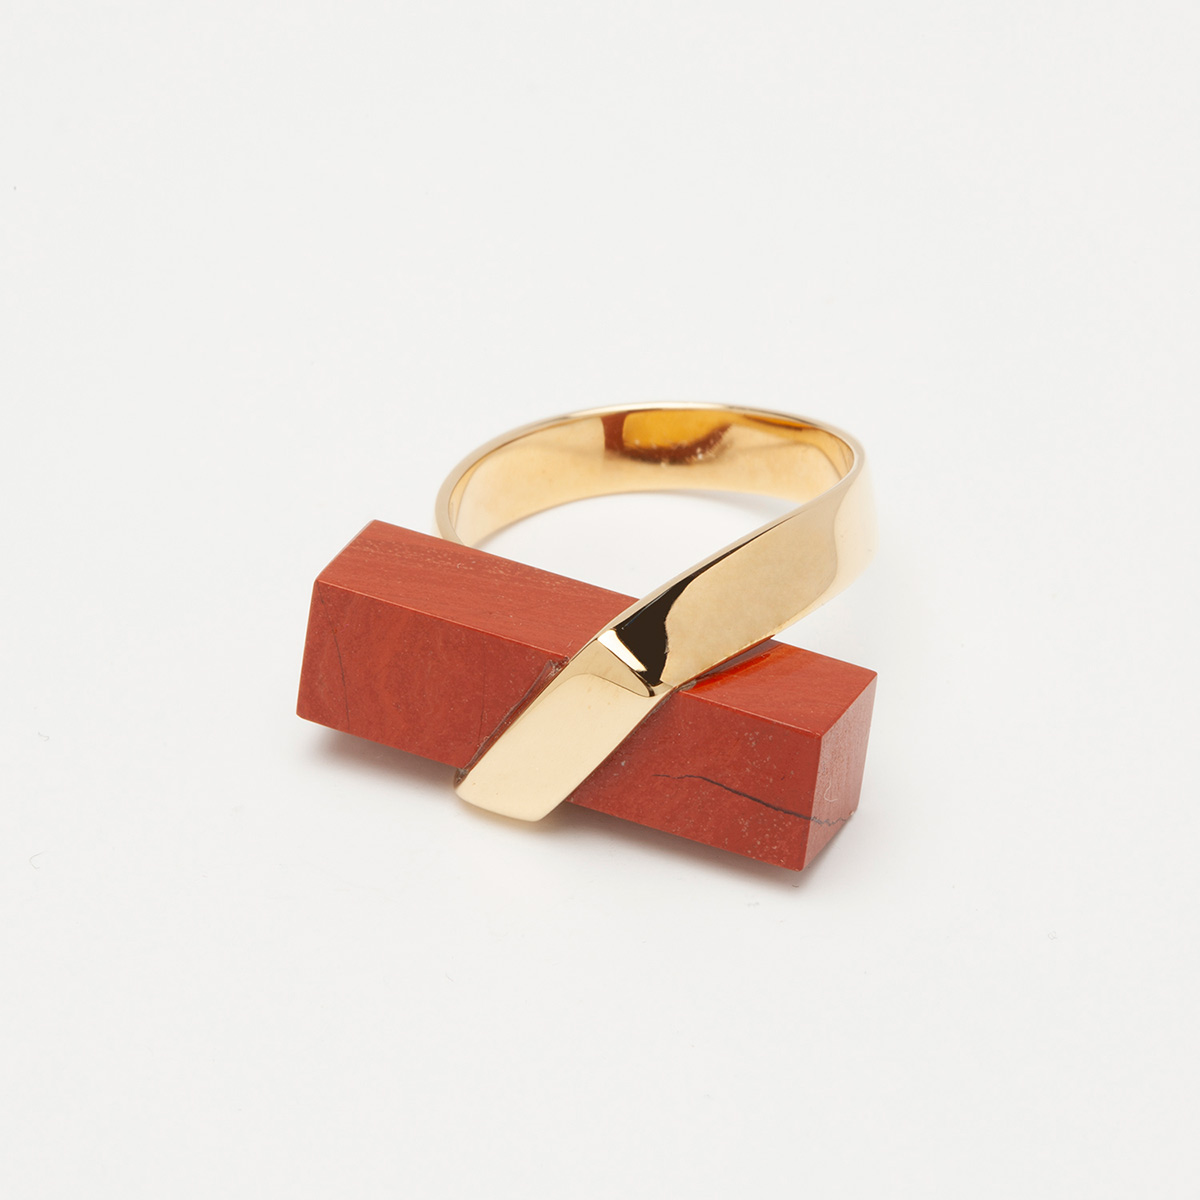 Yei handmade ring in 9k or 18k gold and red jasper 2 designed by Belen Bajo